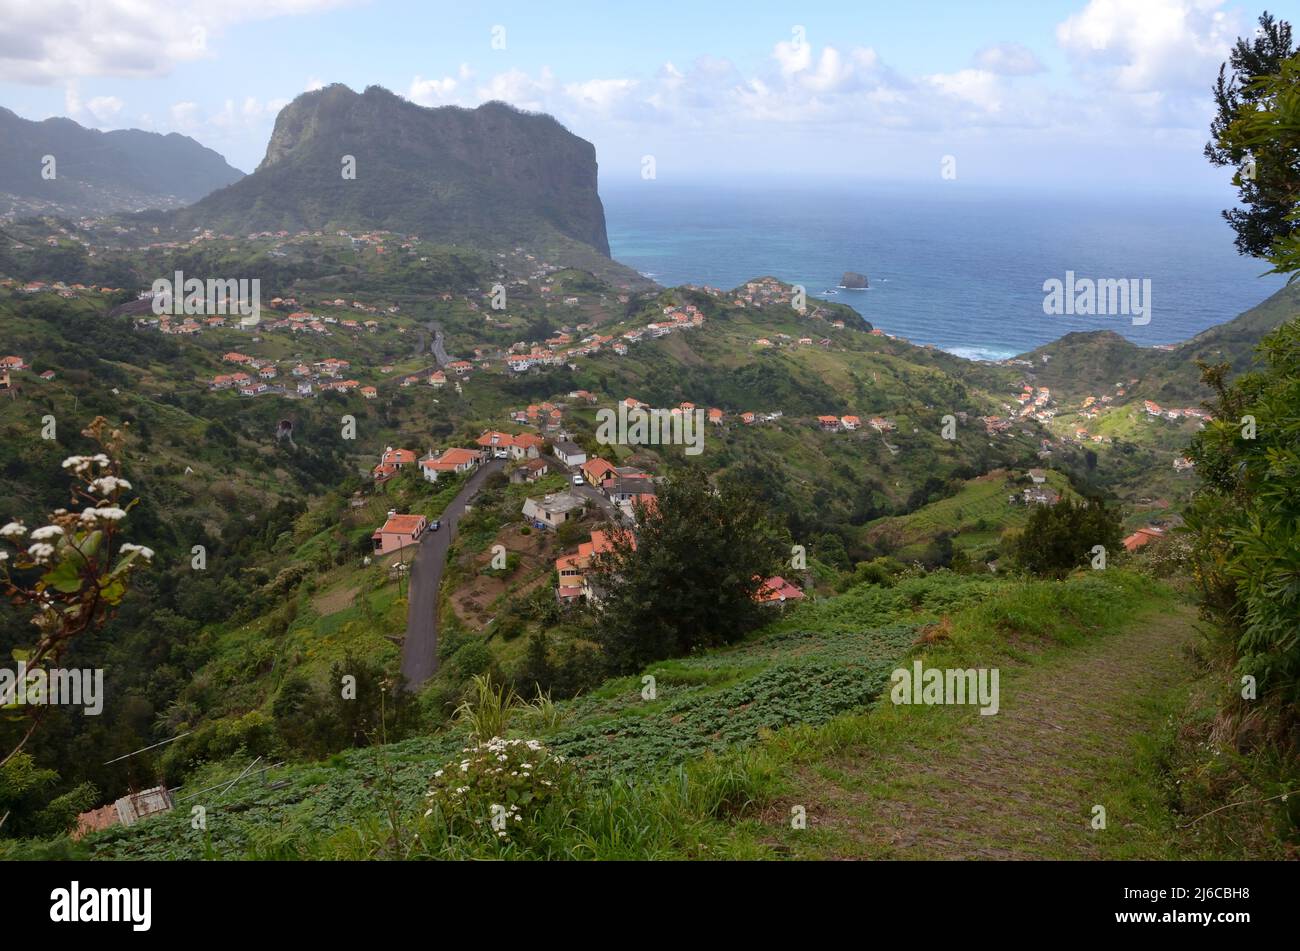 The hill of Penha de Aguia at Porto da Cruz on the north coast of the island of Madeira, Portugal.  Viewed from Cruz da Guarda. Stock Photo